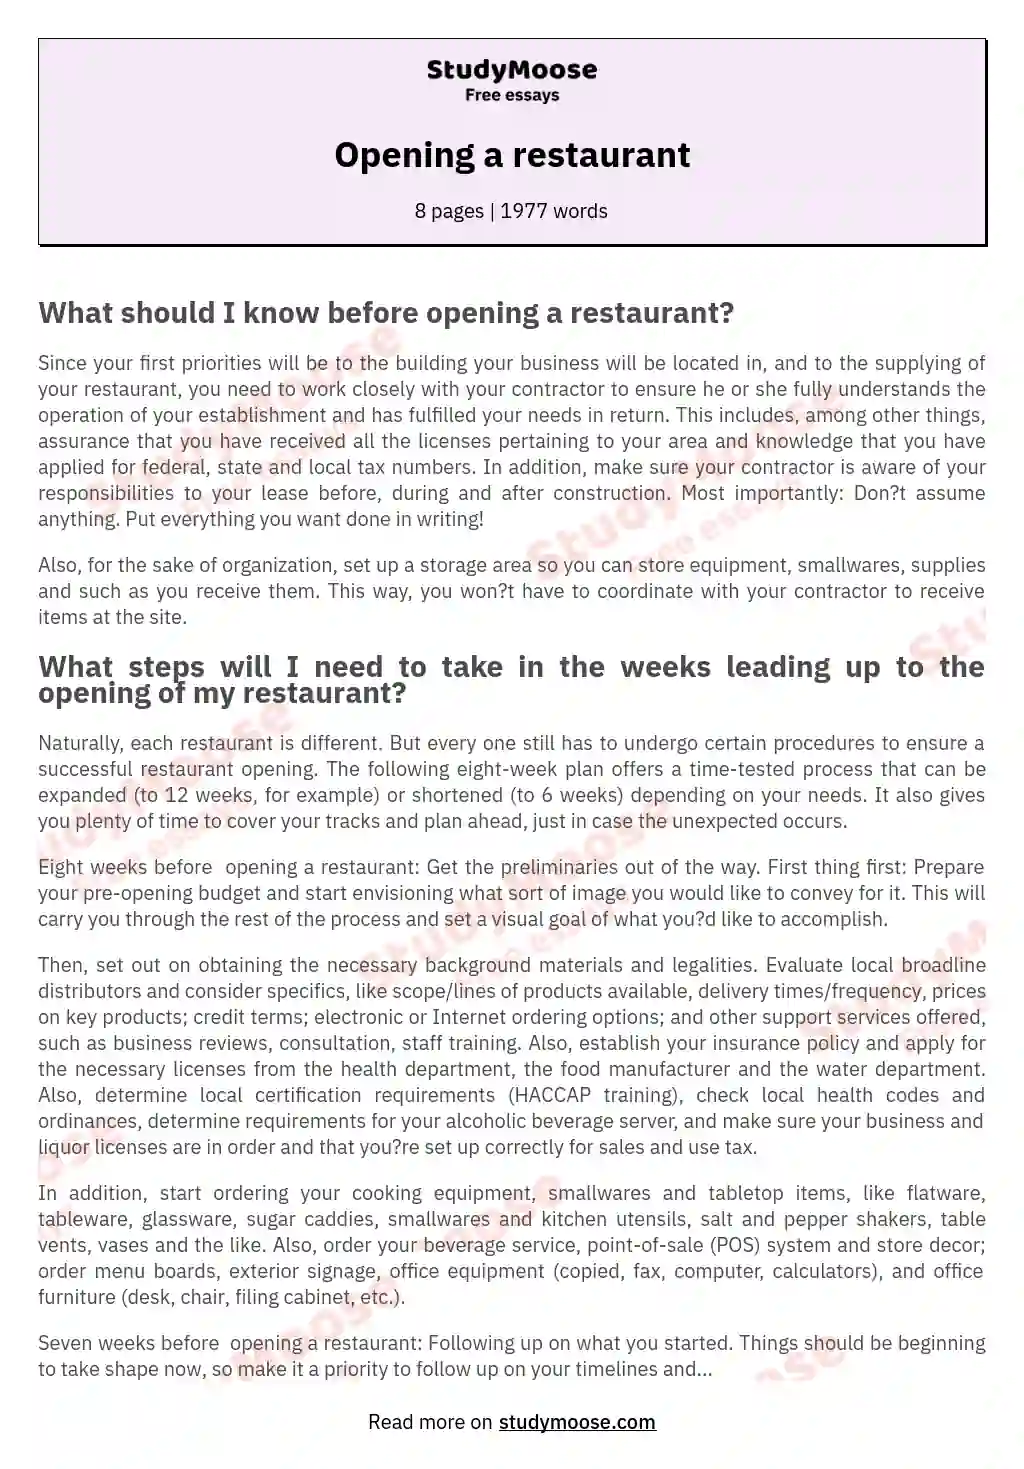 a new restaurant essay